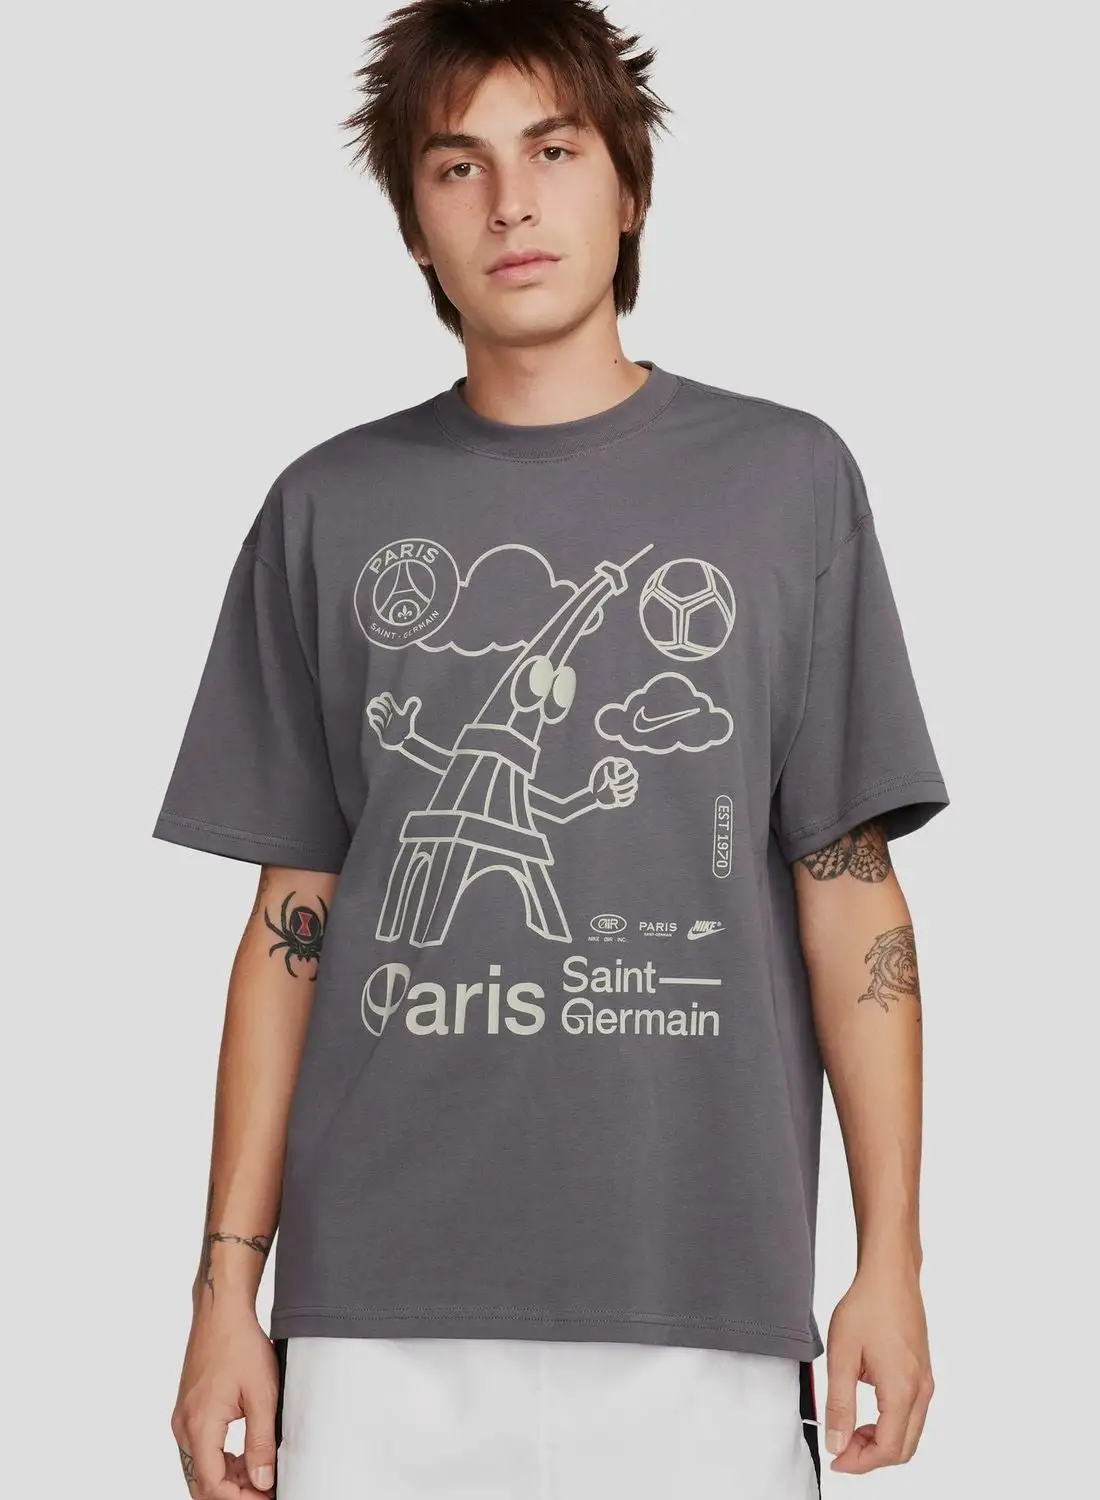 Nike Paris Saint Germain Air Max90 T-Shirt